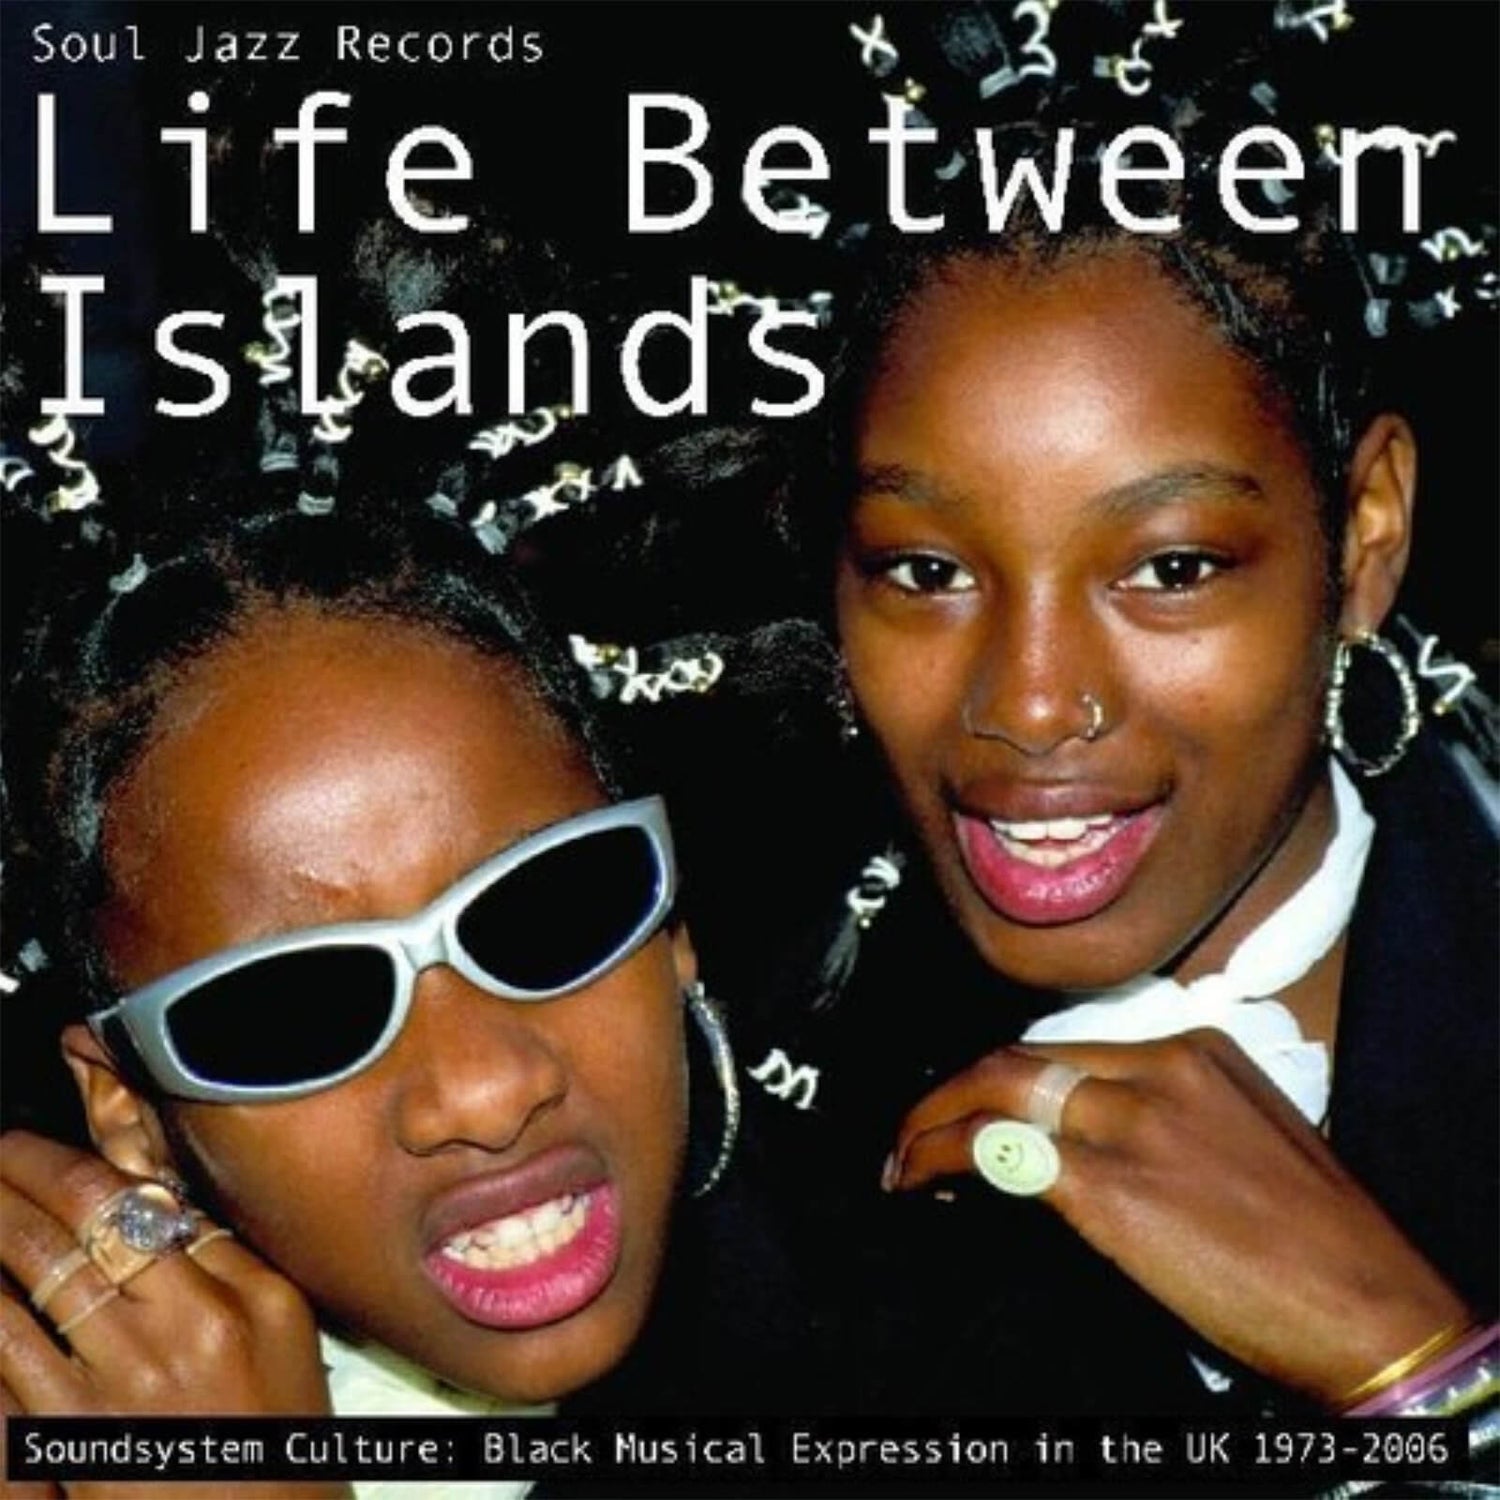 Soul Jazz Records - Life Between Islands: Soundsystem Culture: Black Musical Expression in the UK 1973-2006 Vinyl 3LP